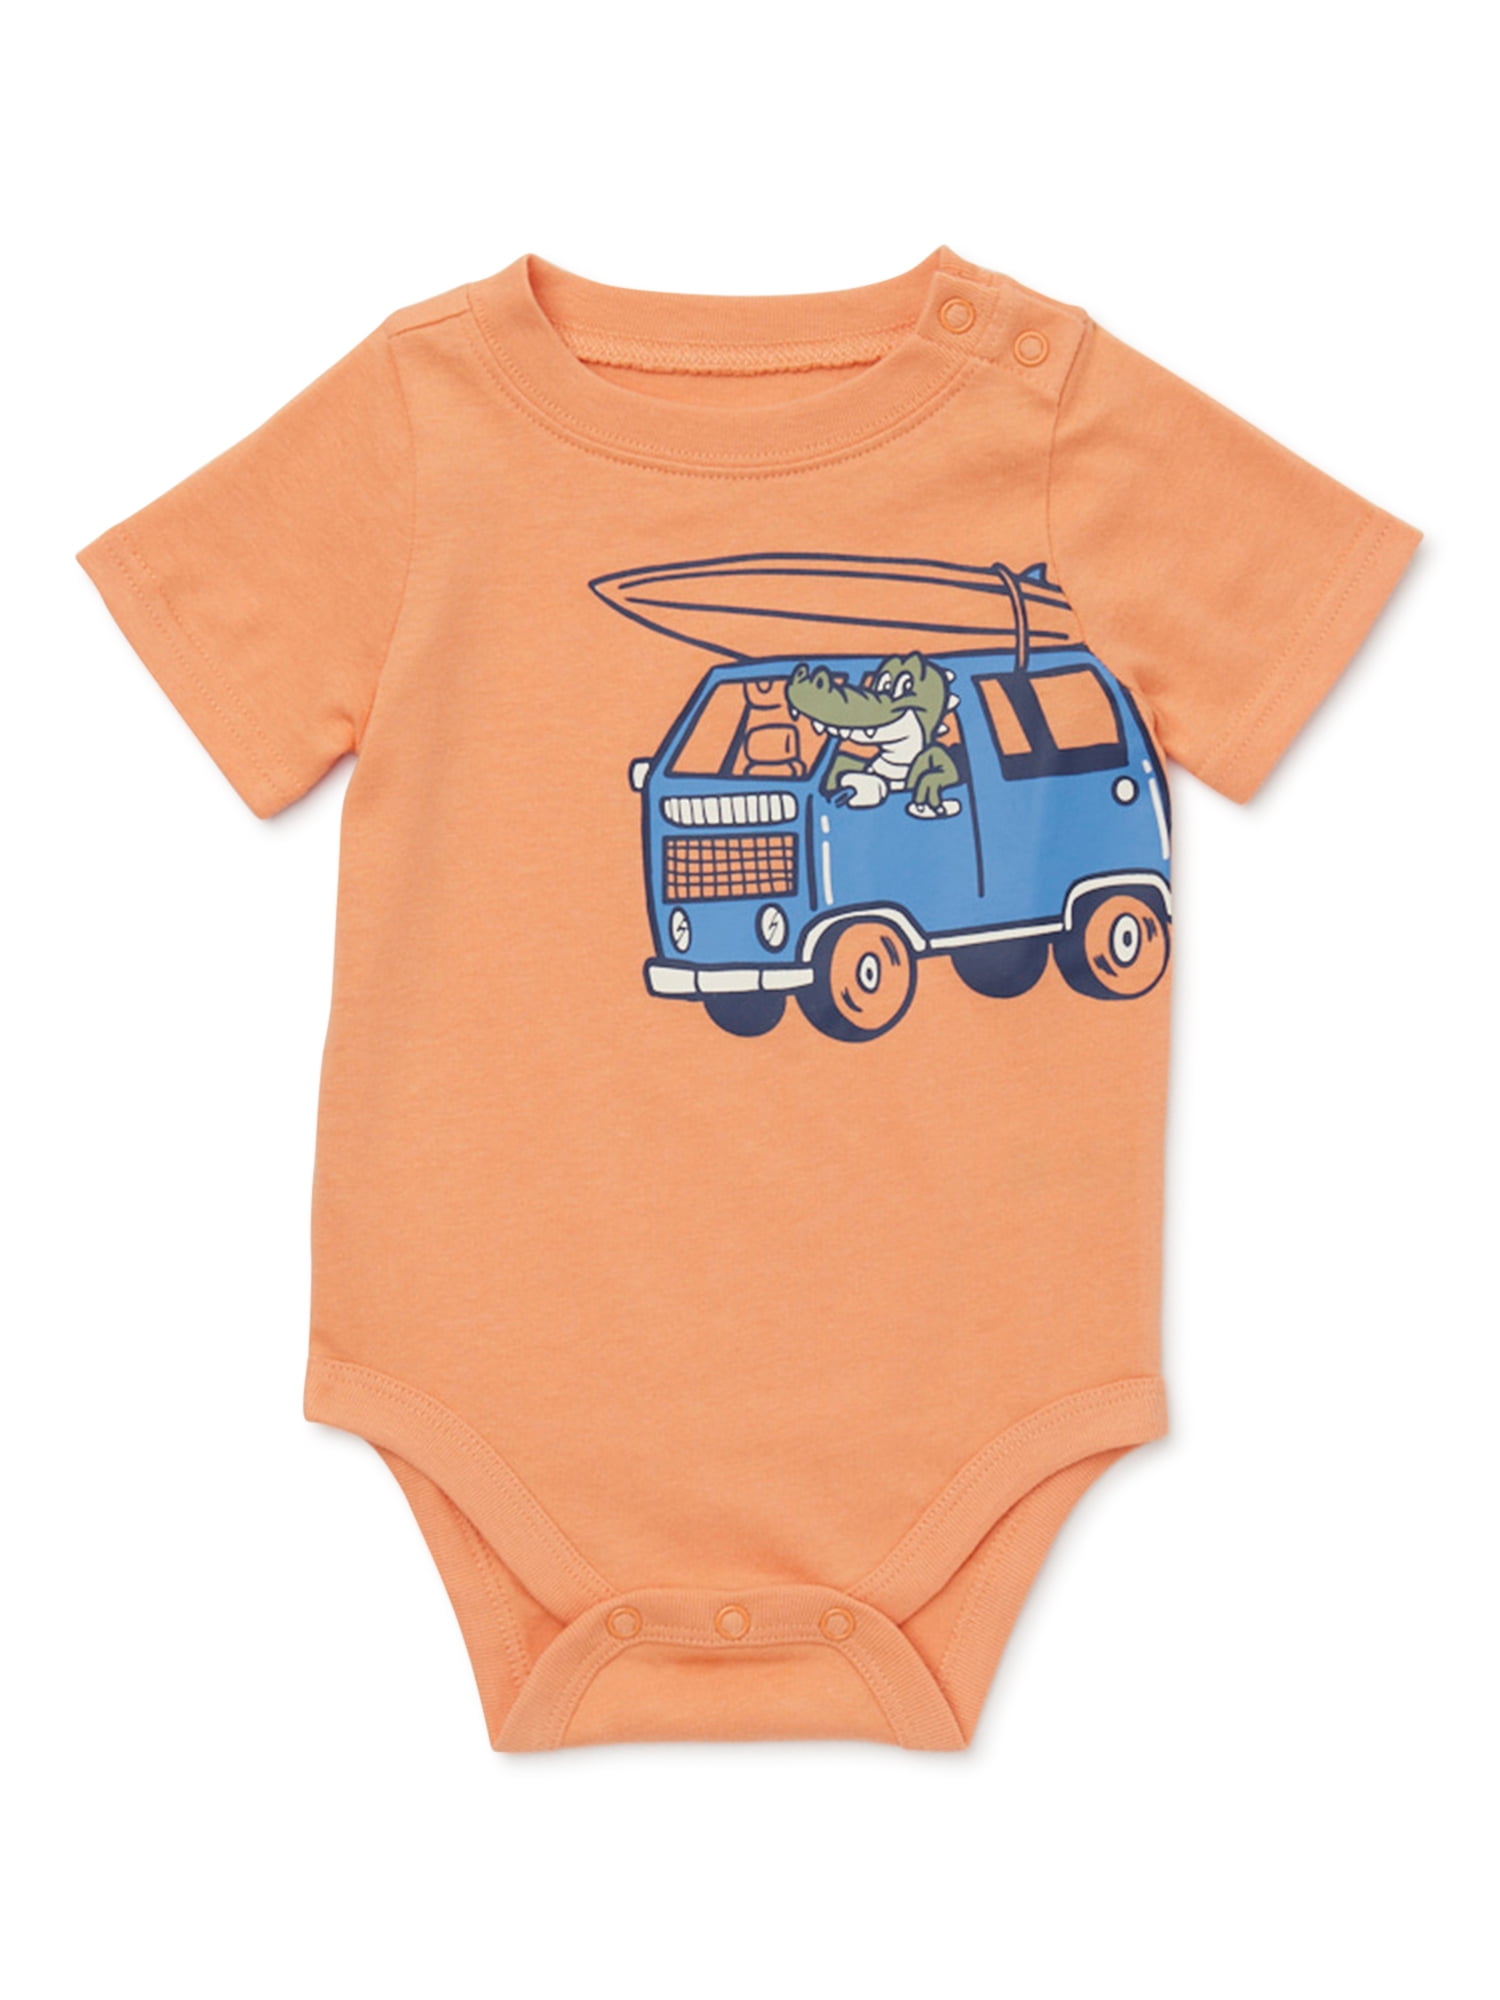 Garanimals Baby Boys’ Graphic Bodysuit with Short Sleeves, Sizes 0M-24M ...